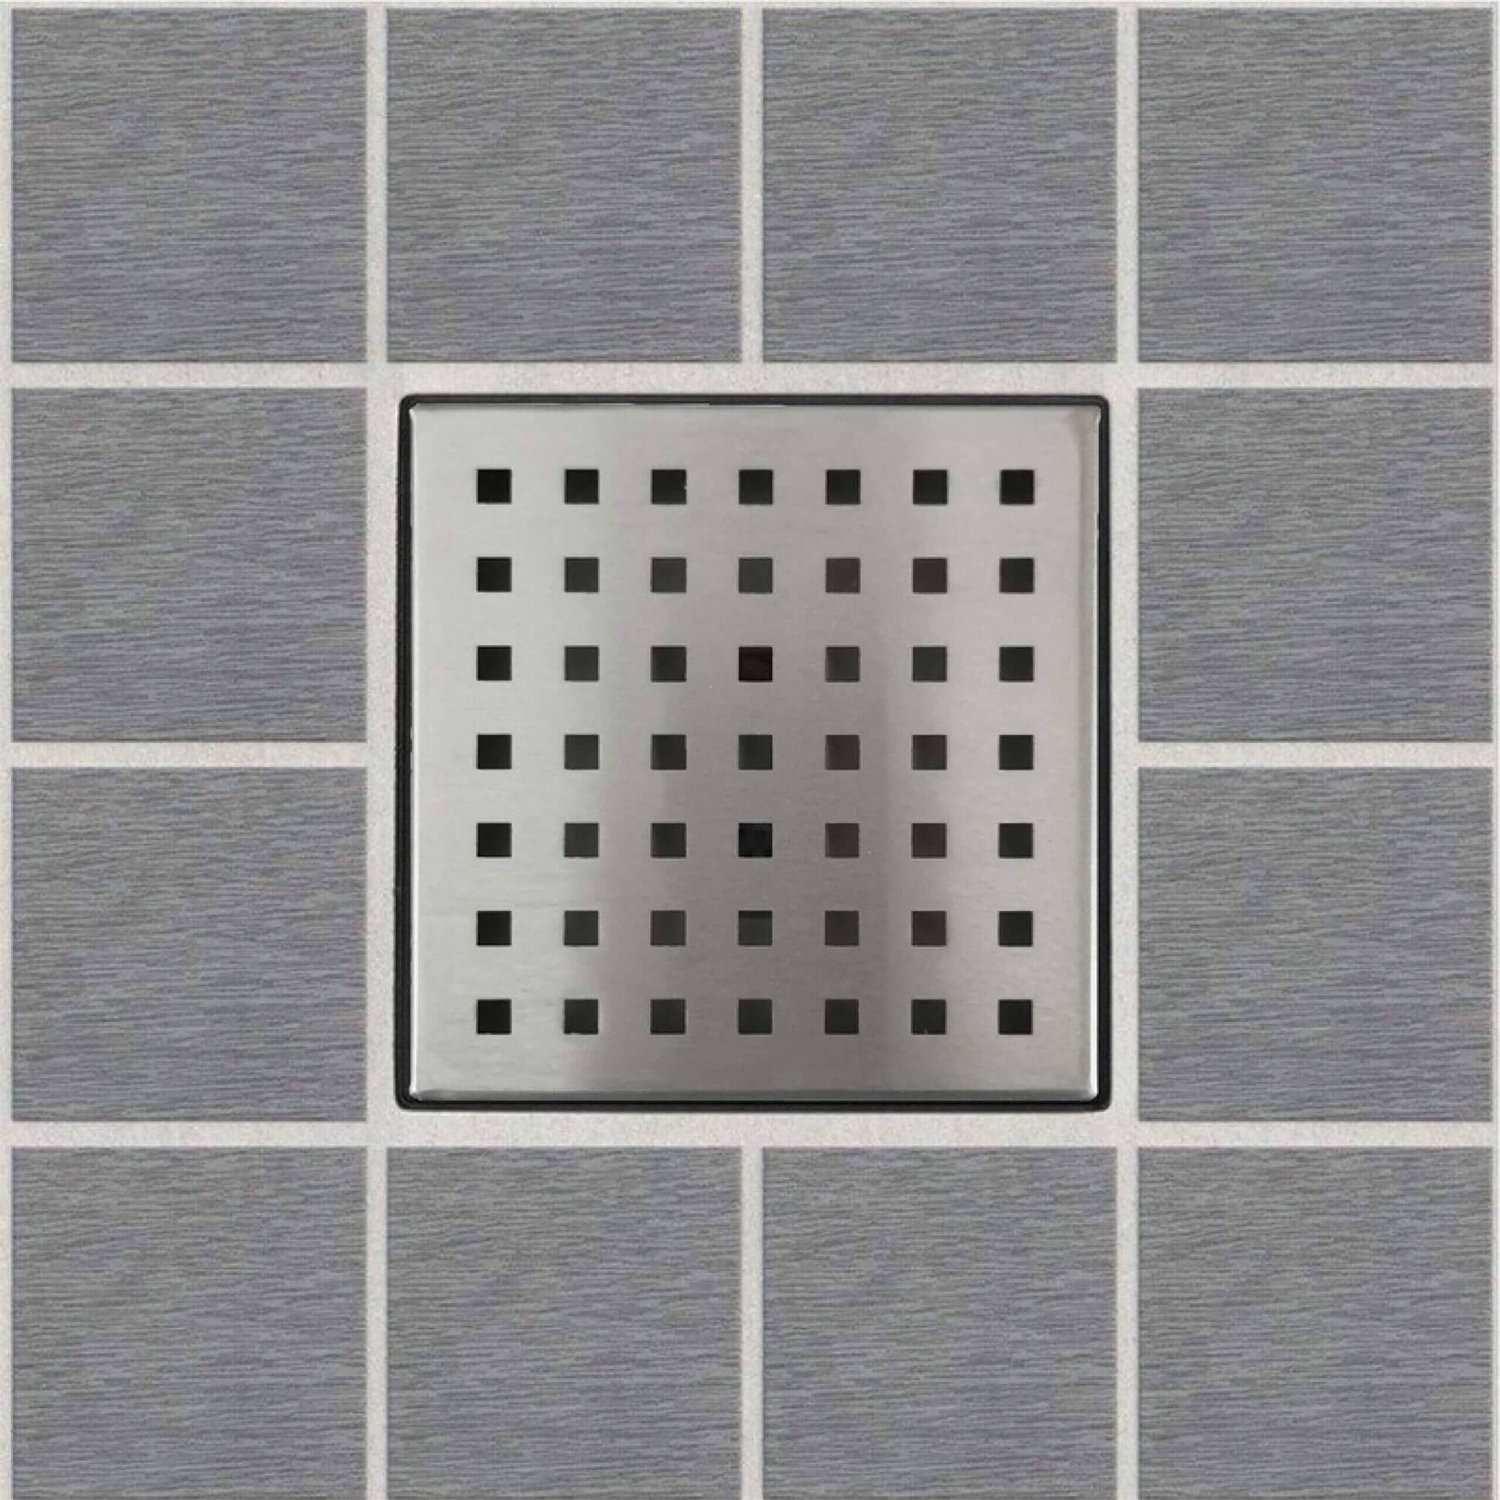 6 x 6 Square Drain with Blue Membrane - PT04 - IB TOOLS